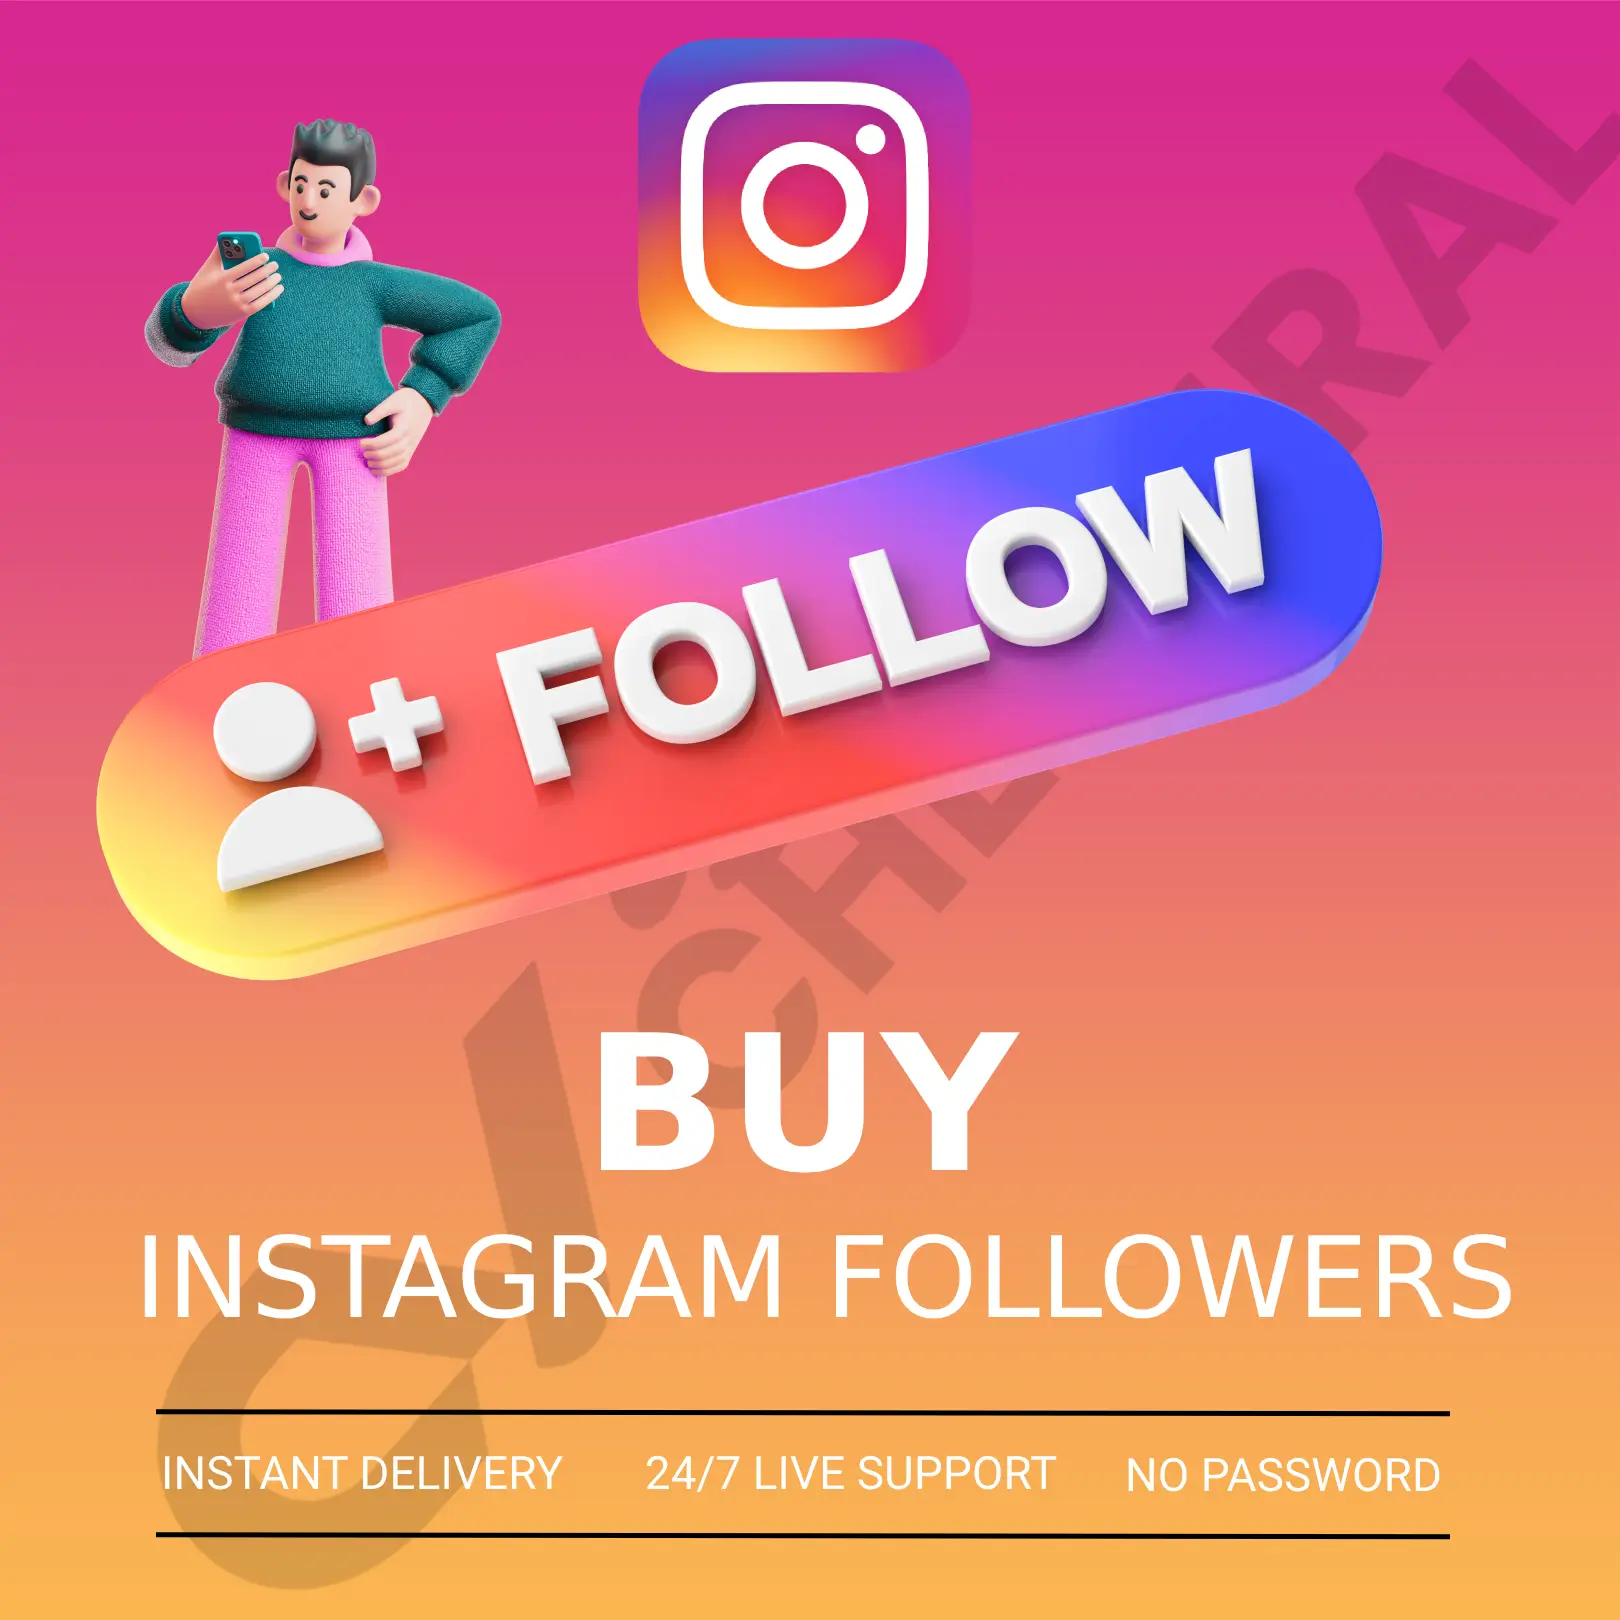 buy instagram followers description